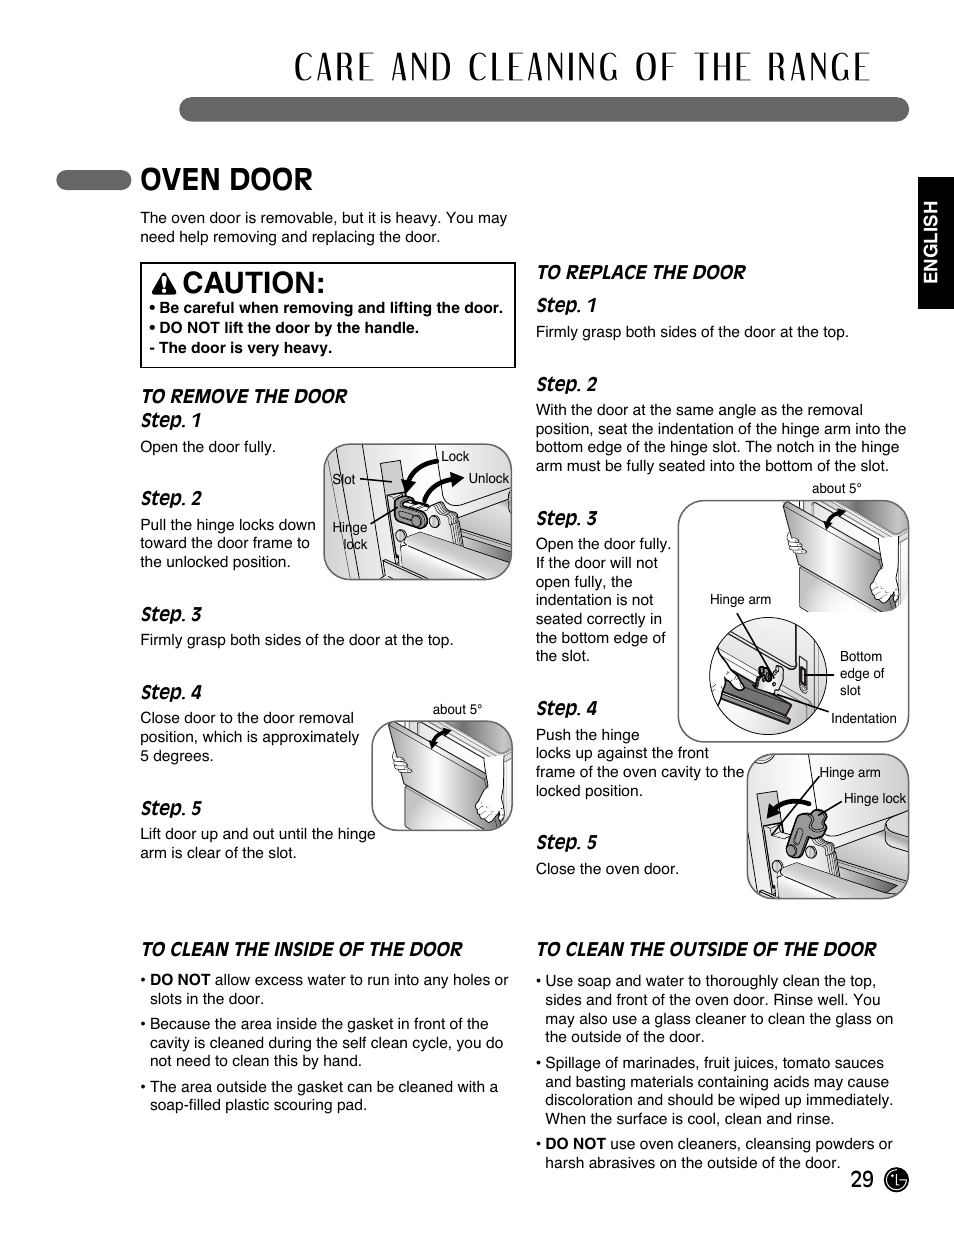 Oven door, Caution | LG Gas Range LRG3093ST User Manual | Page 29 / 38